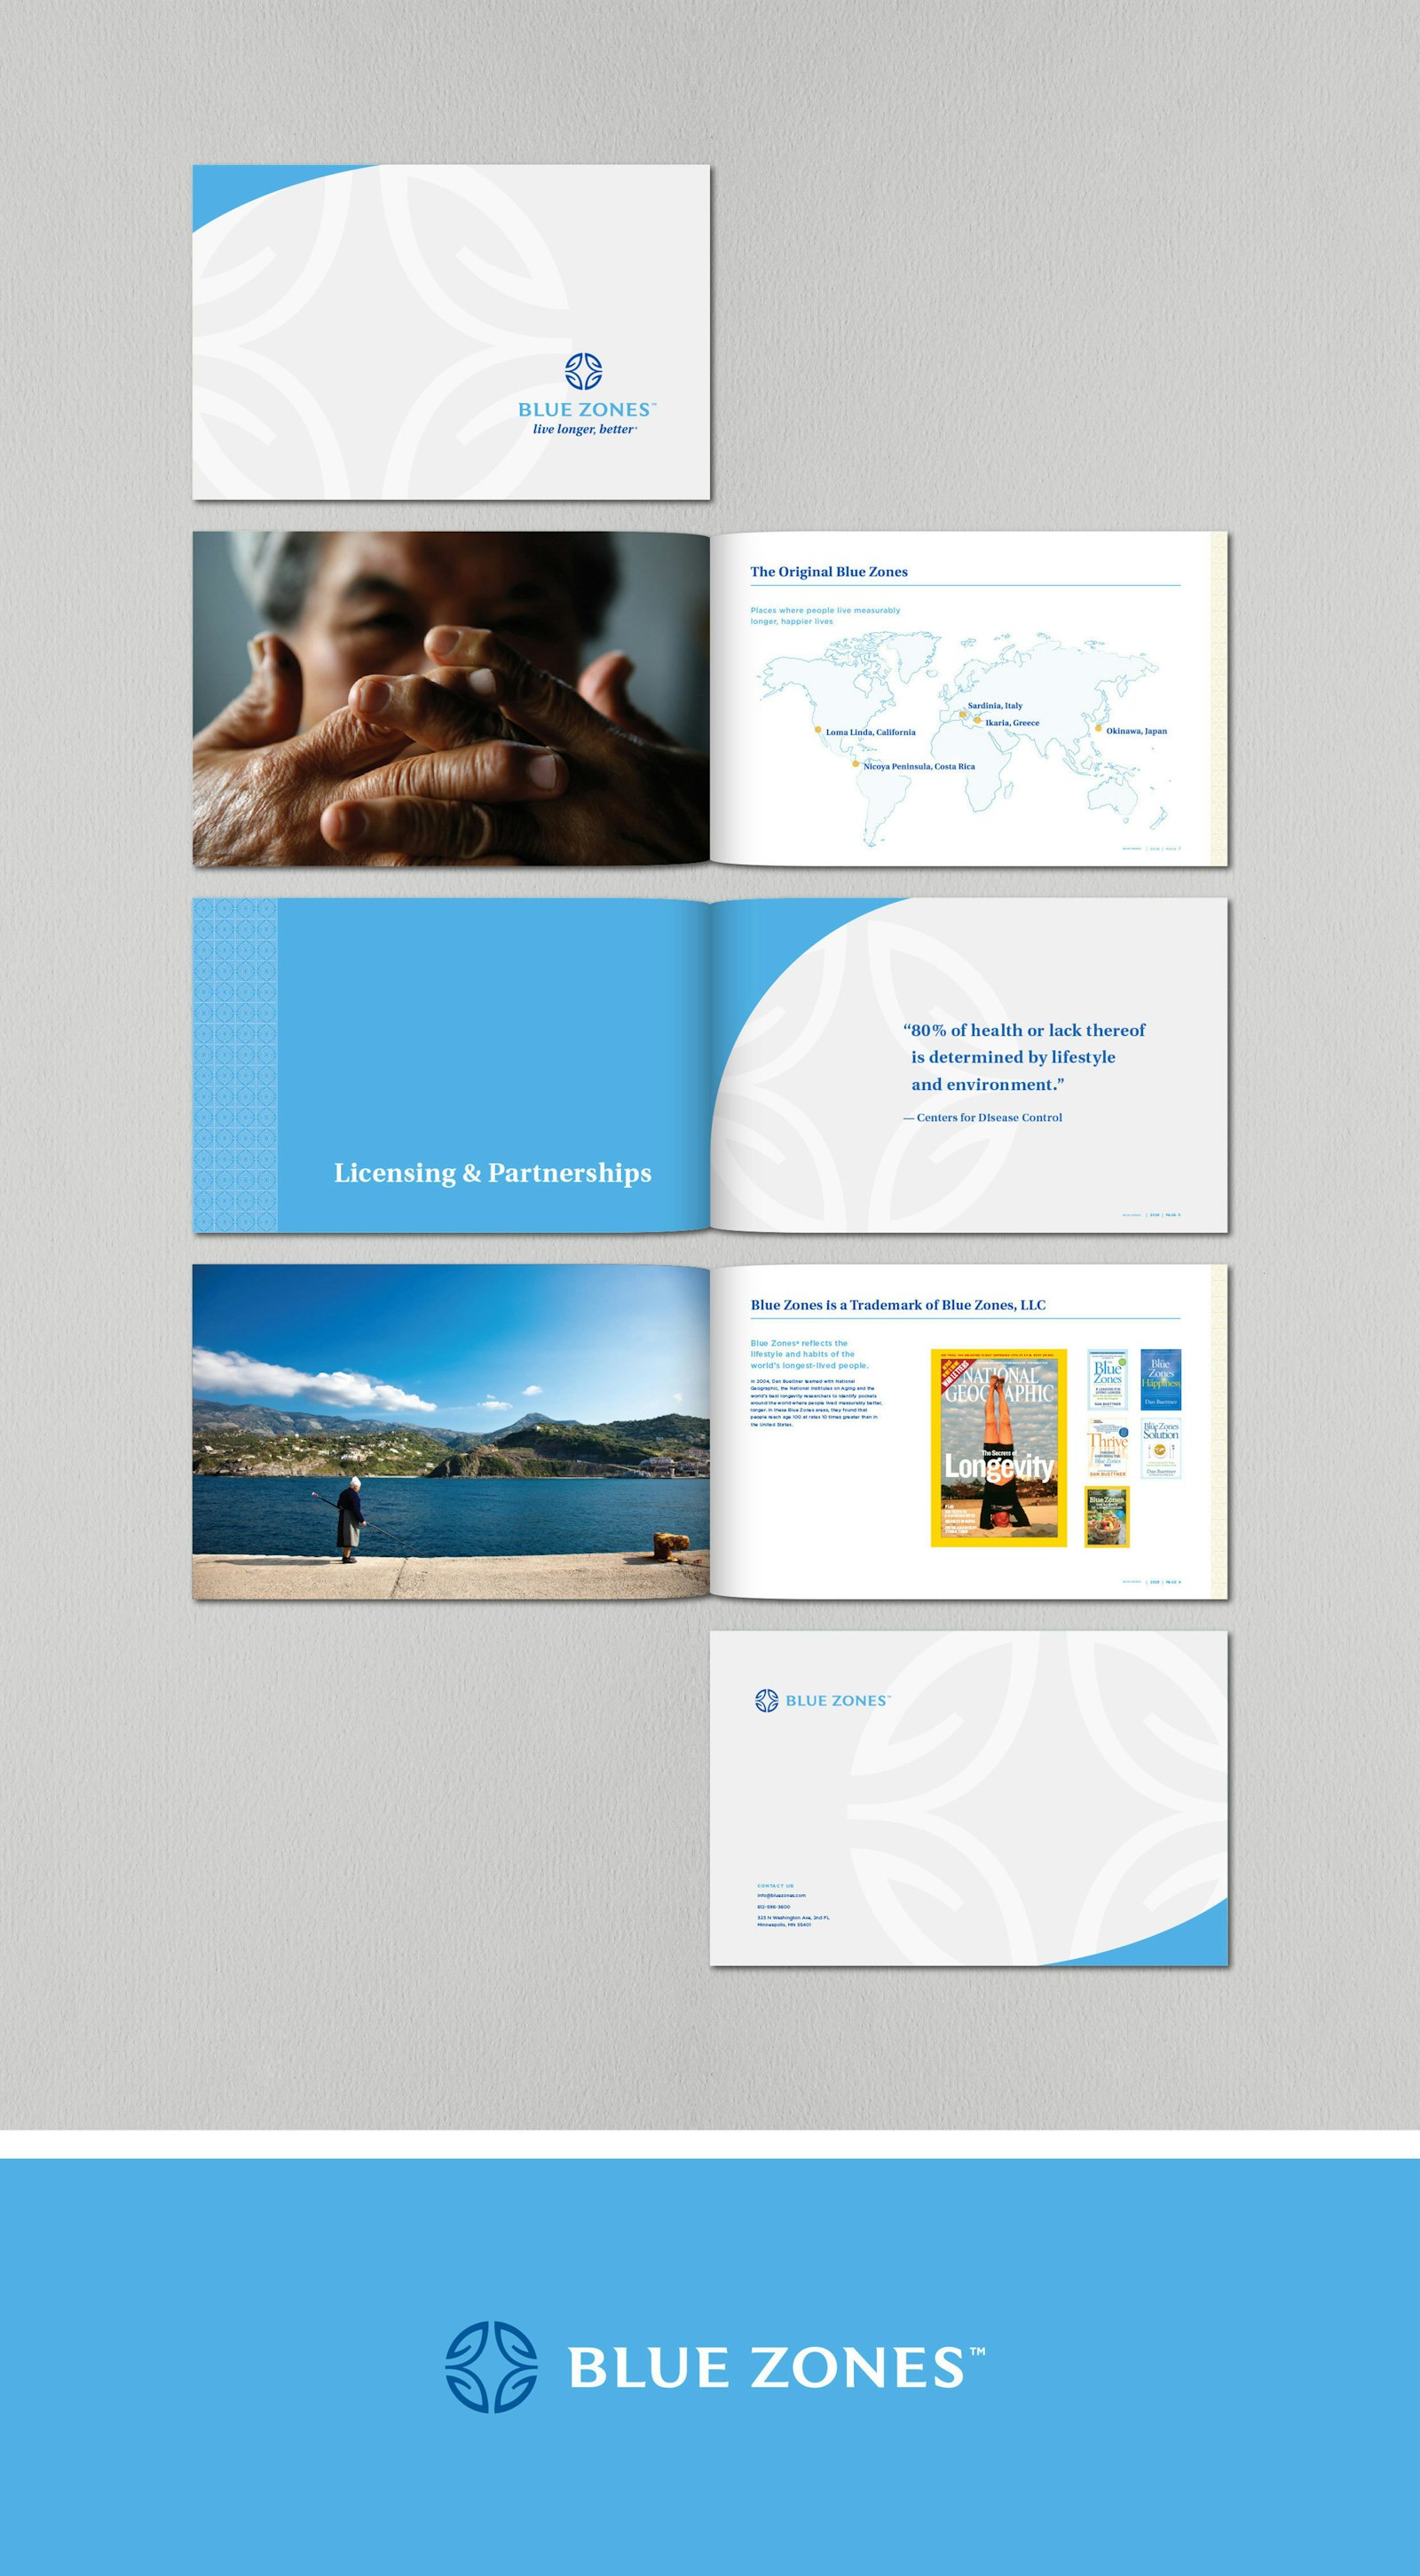 The Blue Zones by Dan Buettner brand logo mark design brochures and presentation materials.